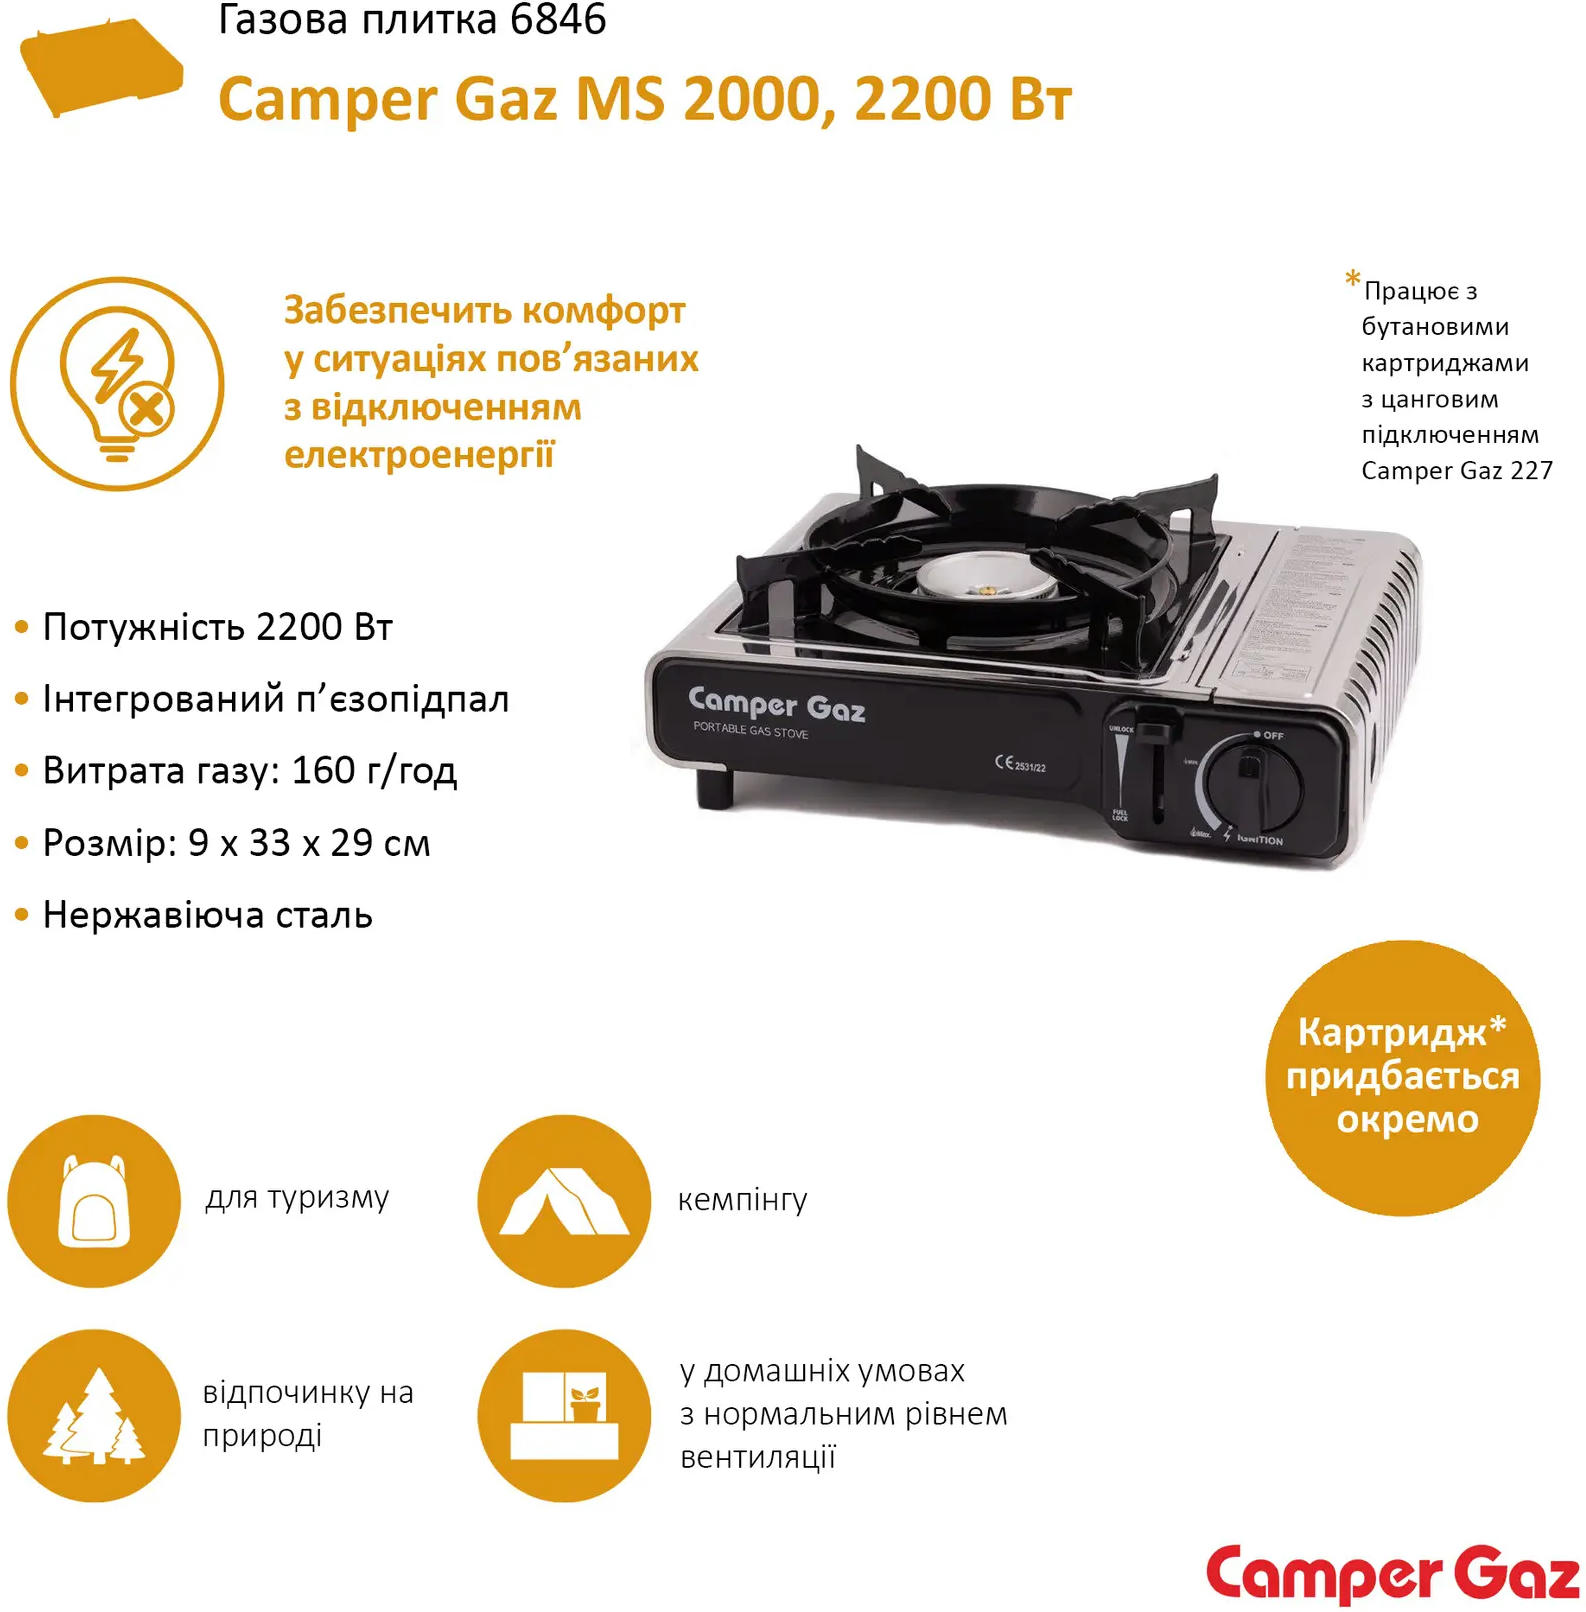 Плита газовая Camper Gaz MS 2000 пьезо 2200 ВТ (6846) фото 3